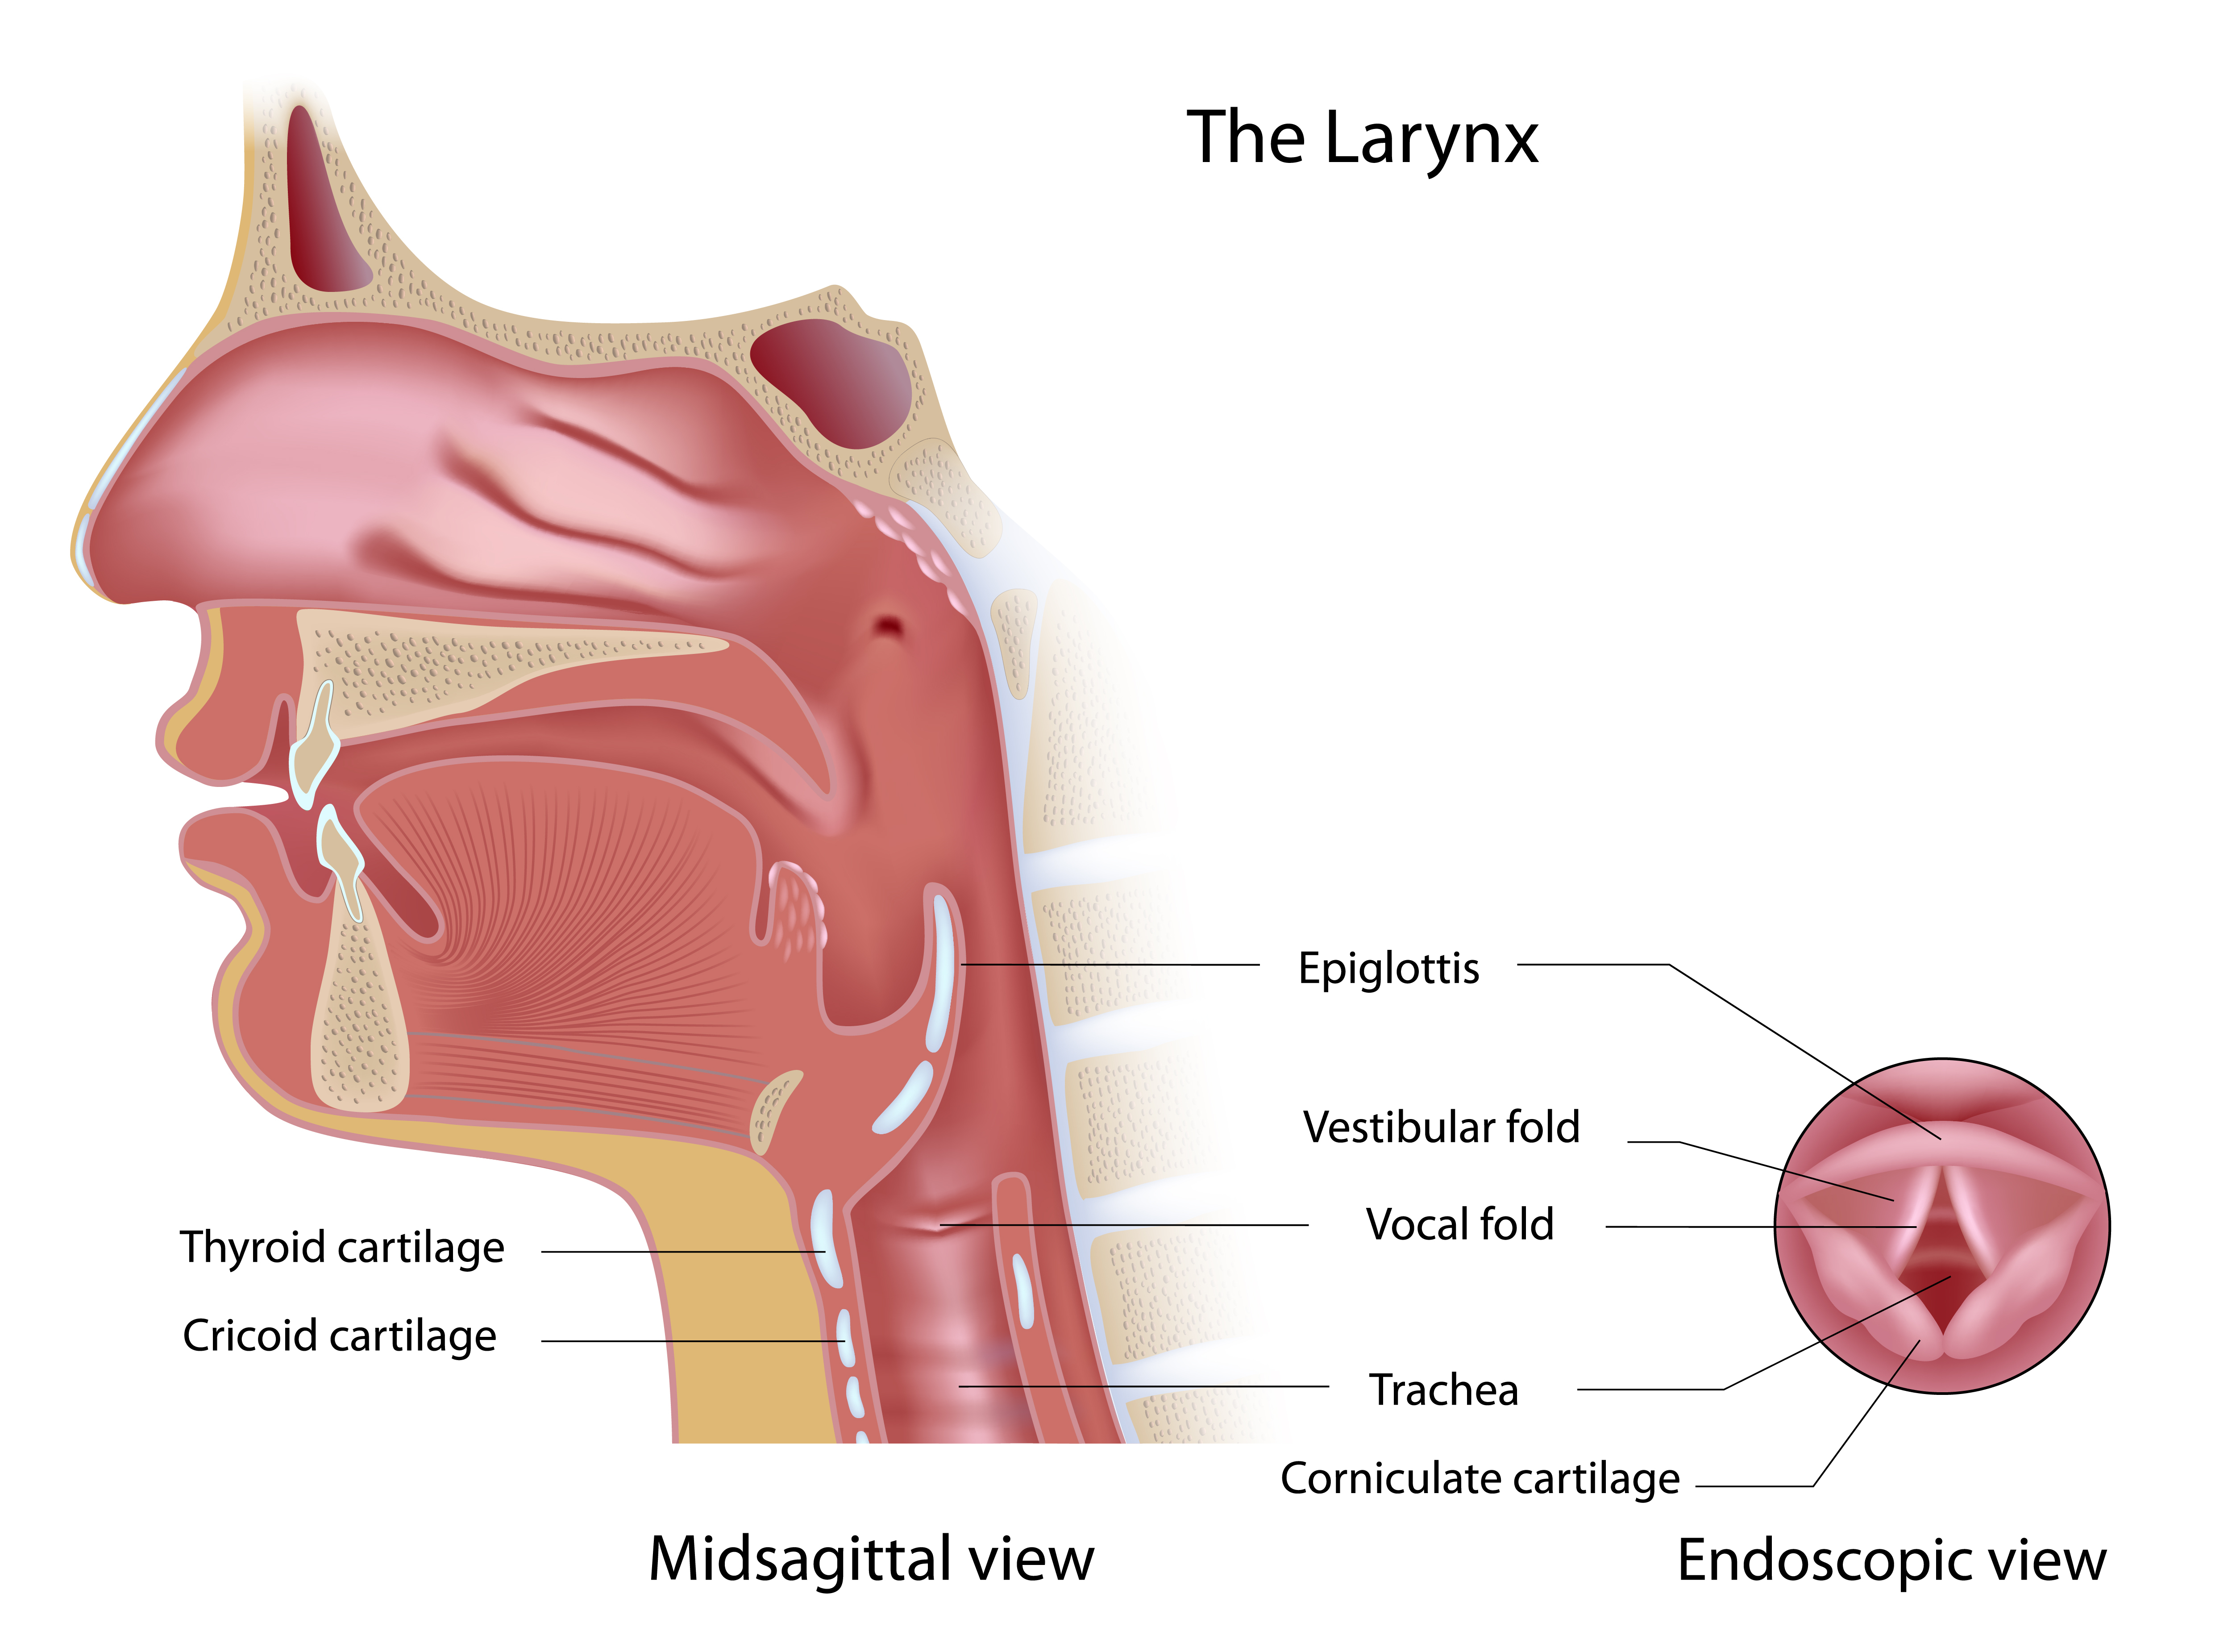 Figure 1: Illustration of basic laryngeal structures. Shutterstock.